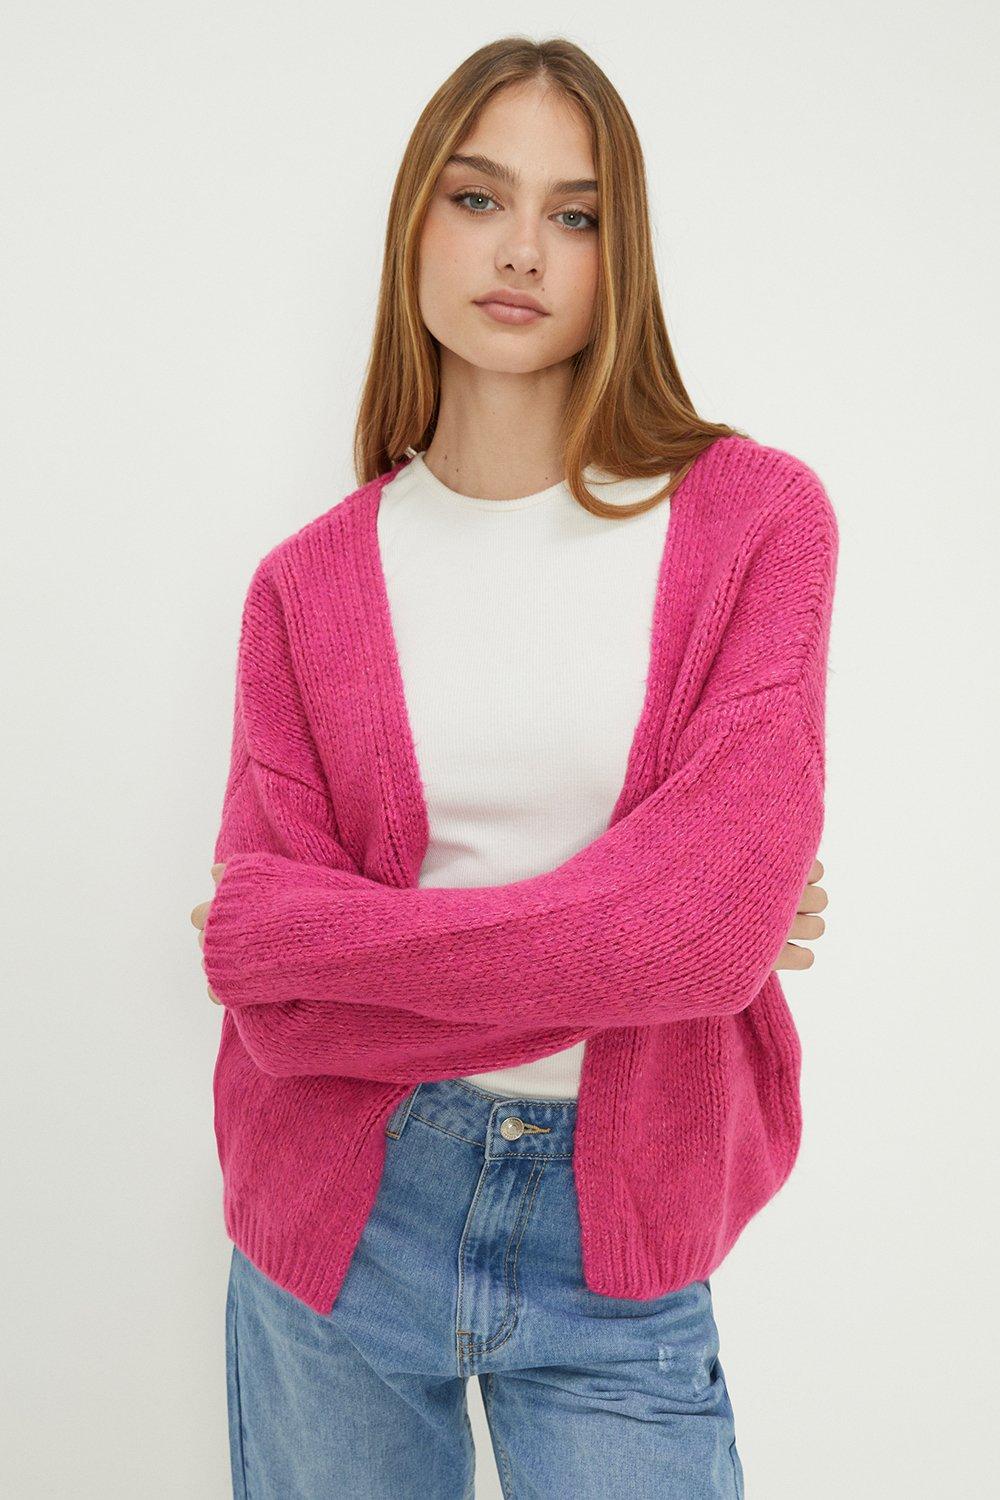 Women’s Chunky Knit Oversized Batwing Cardigan - pink - M/L